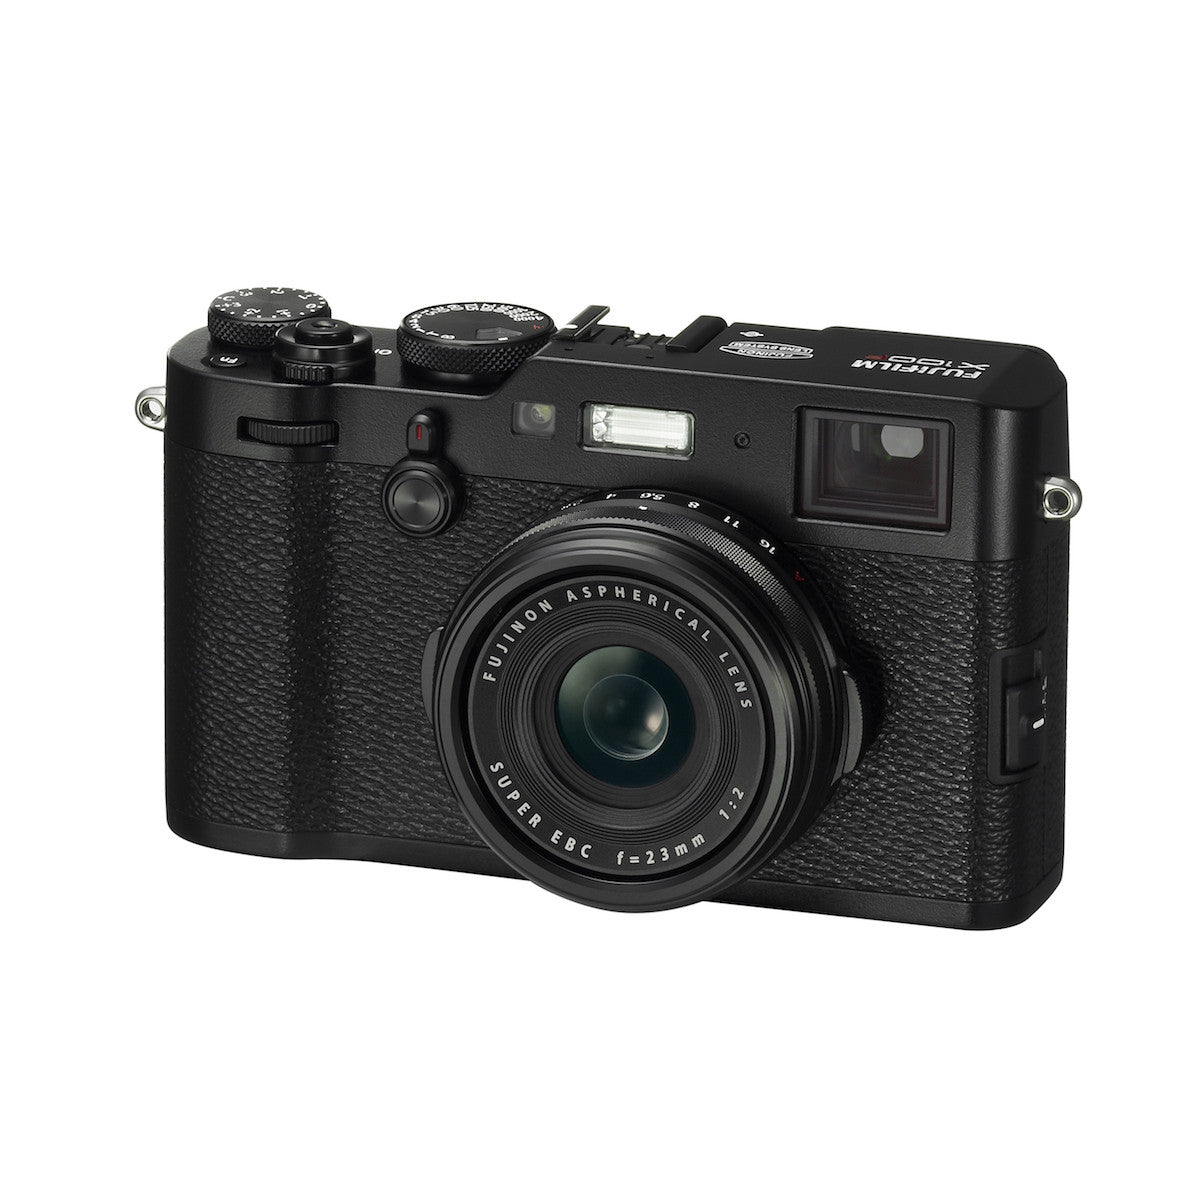 Fujifilm X100F Digital Camera (Black)